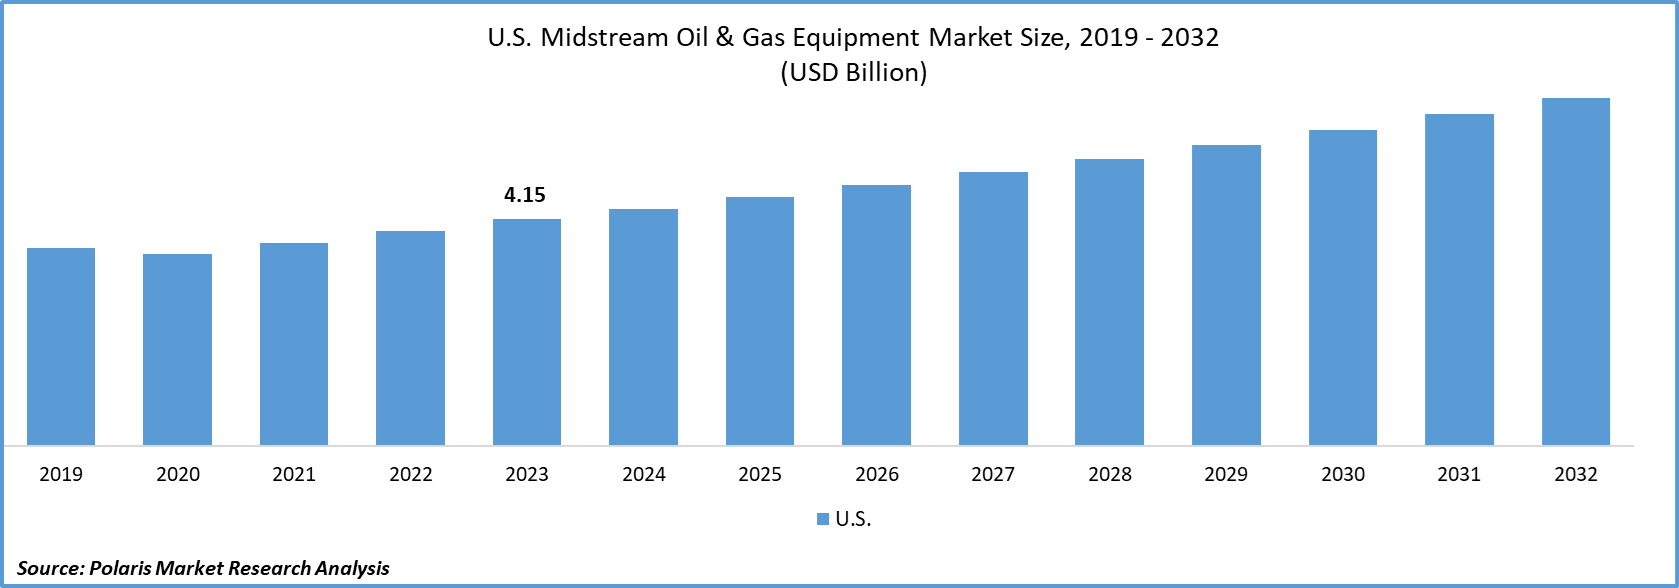 U.S. Midstream Oil & Gas Equipment Market Size